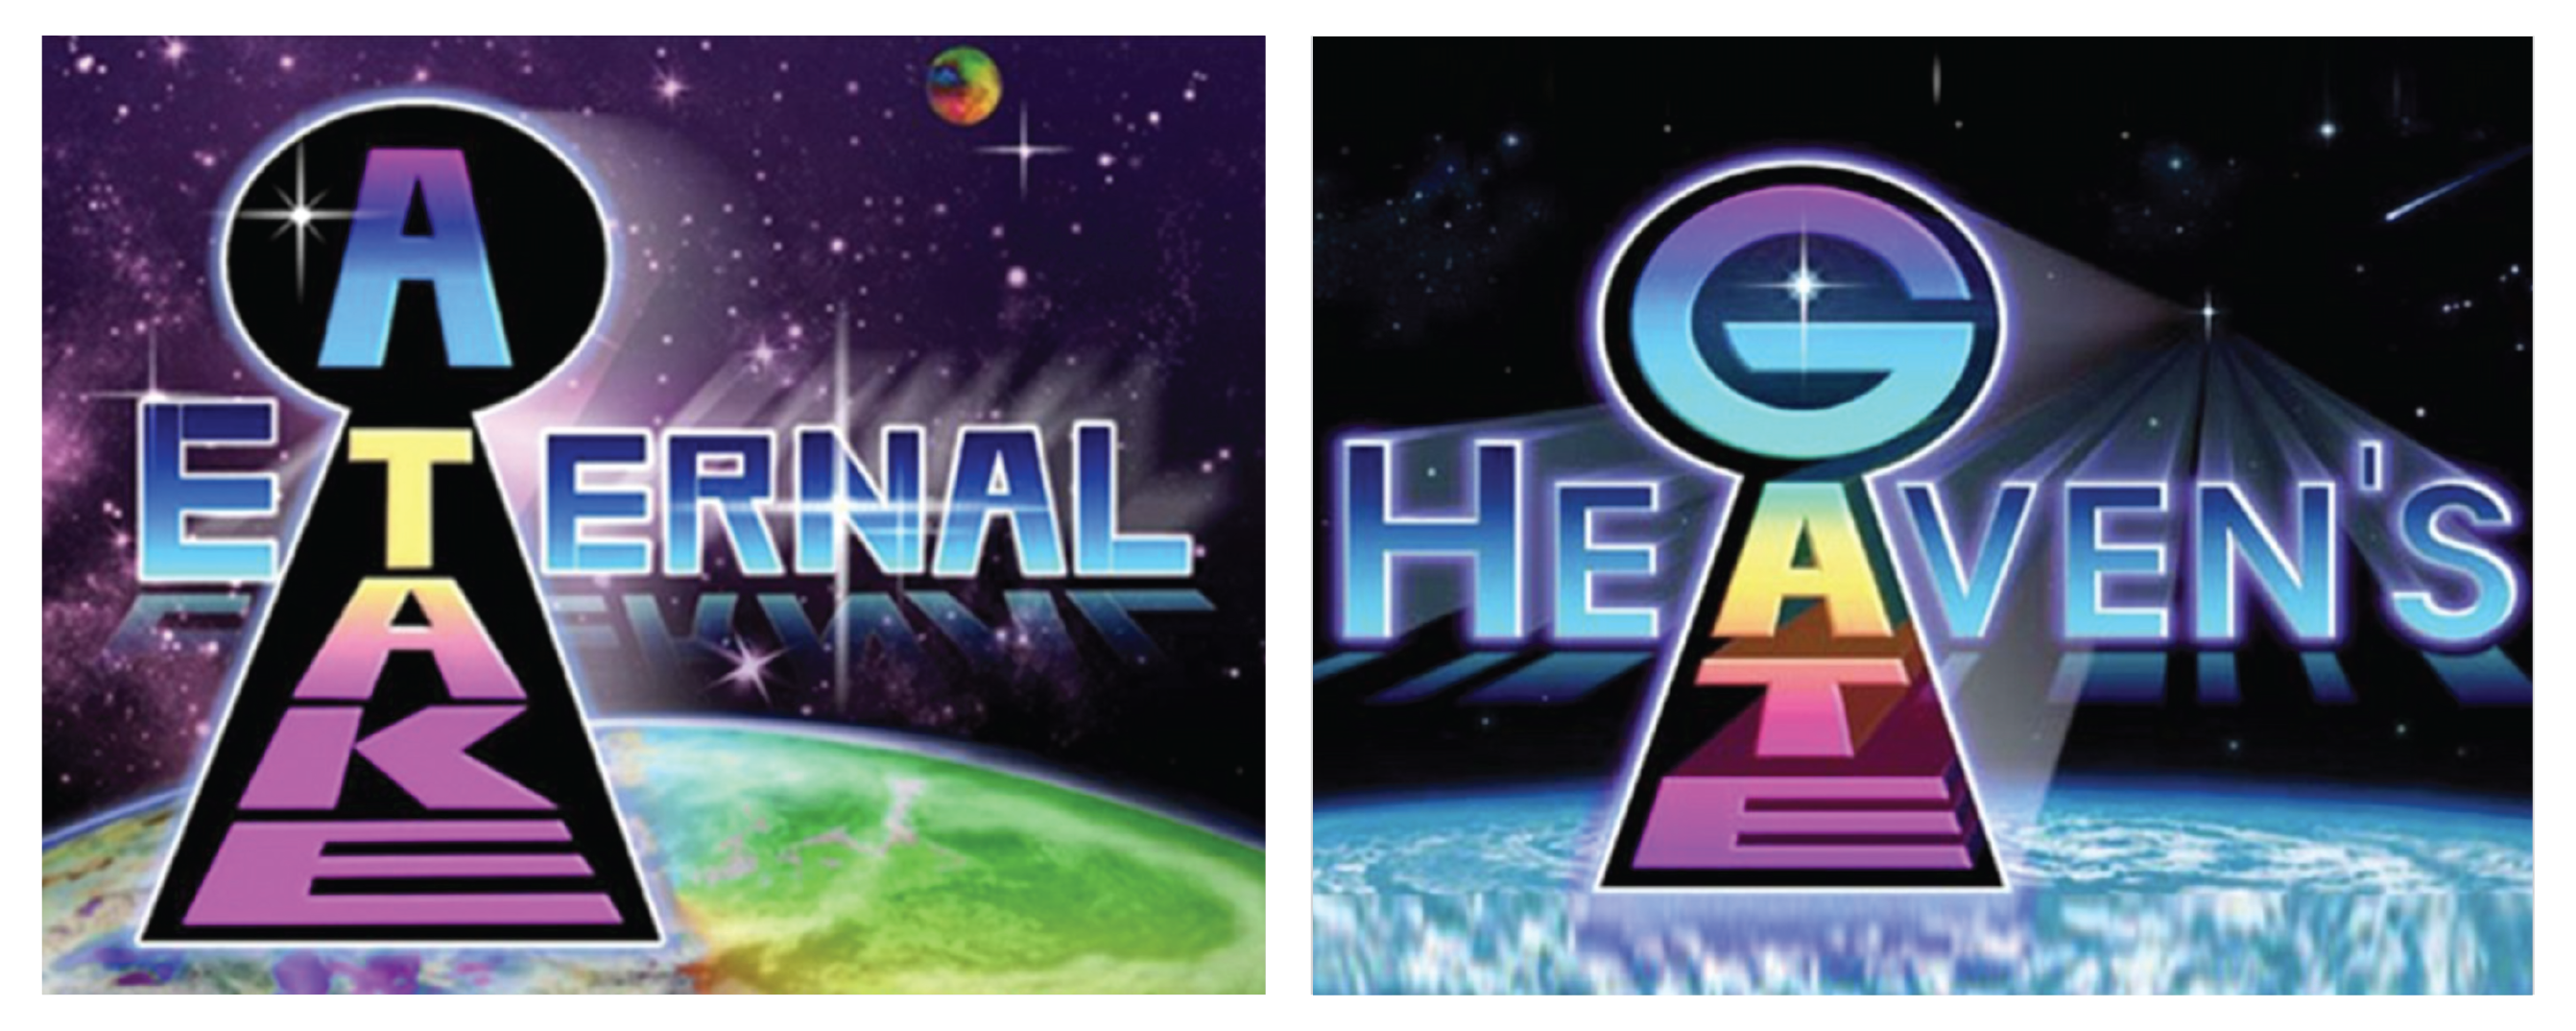 Lil Uzi Vert album art as it compares to the Heaven's Gate Cult logo